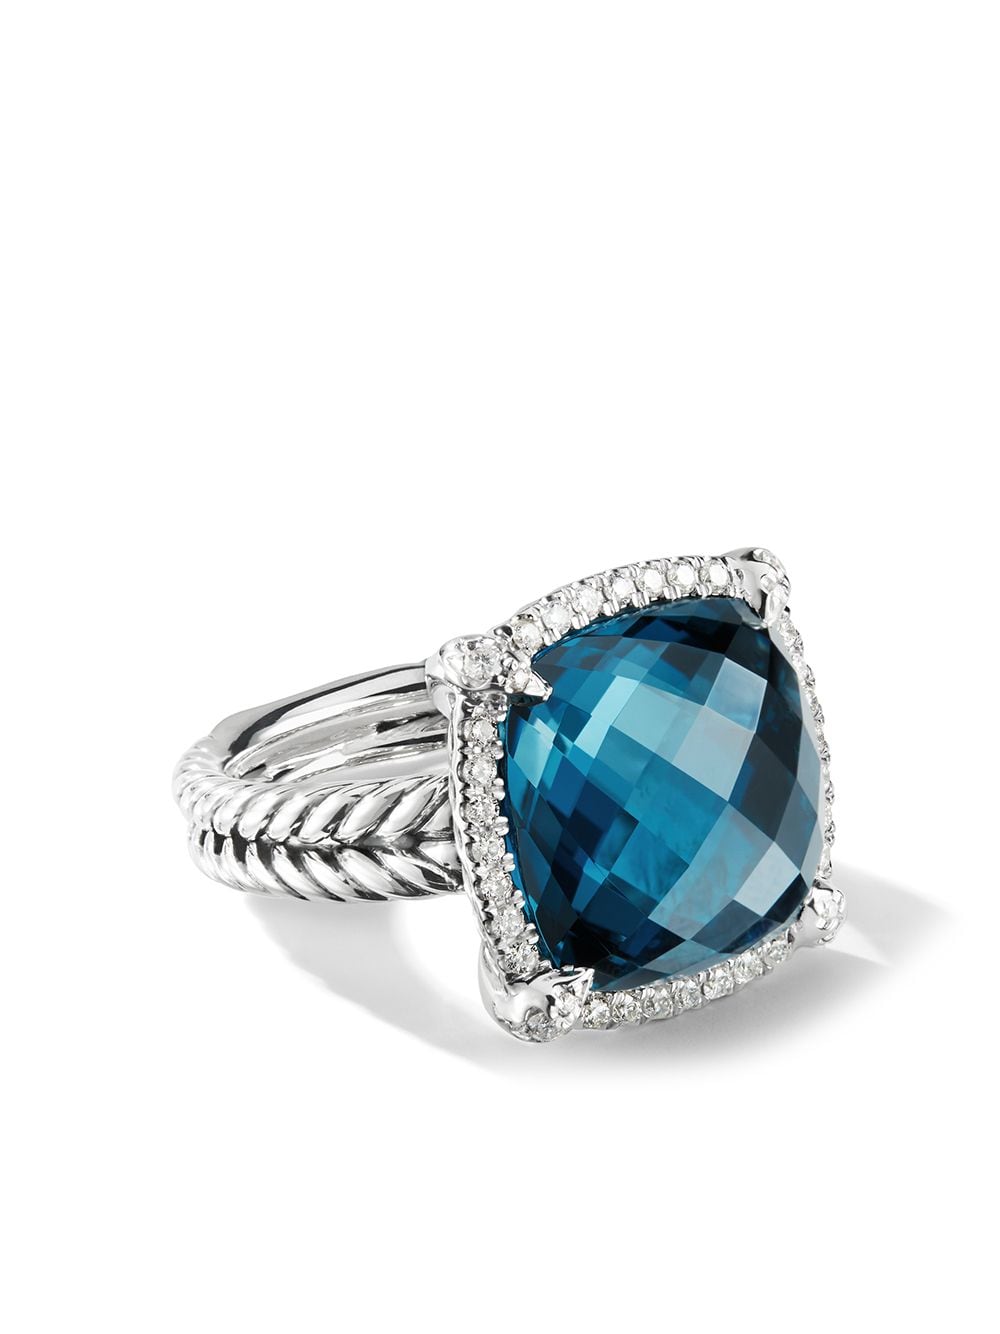 David Yurman 14mm sterling silver Chatelaine pavé diamond and blue topaz ring von David Yurman